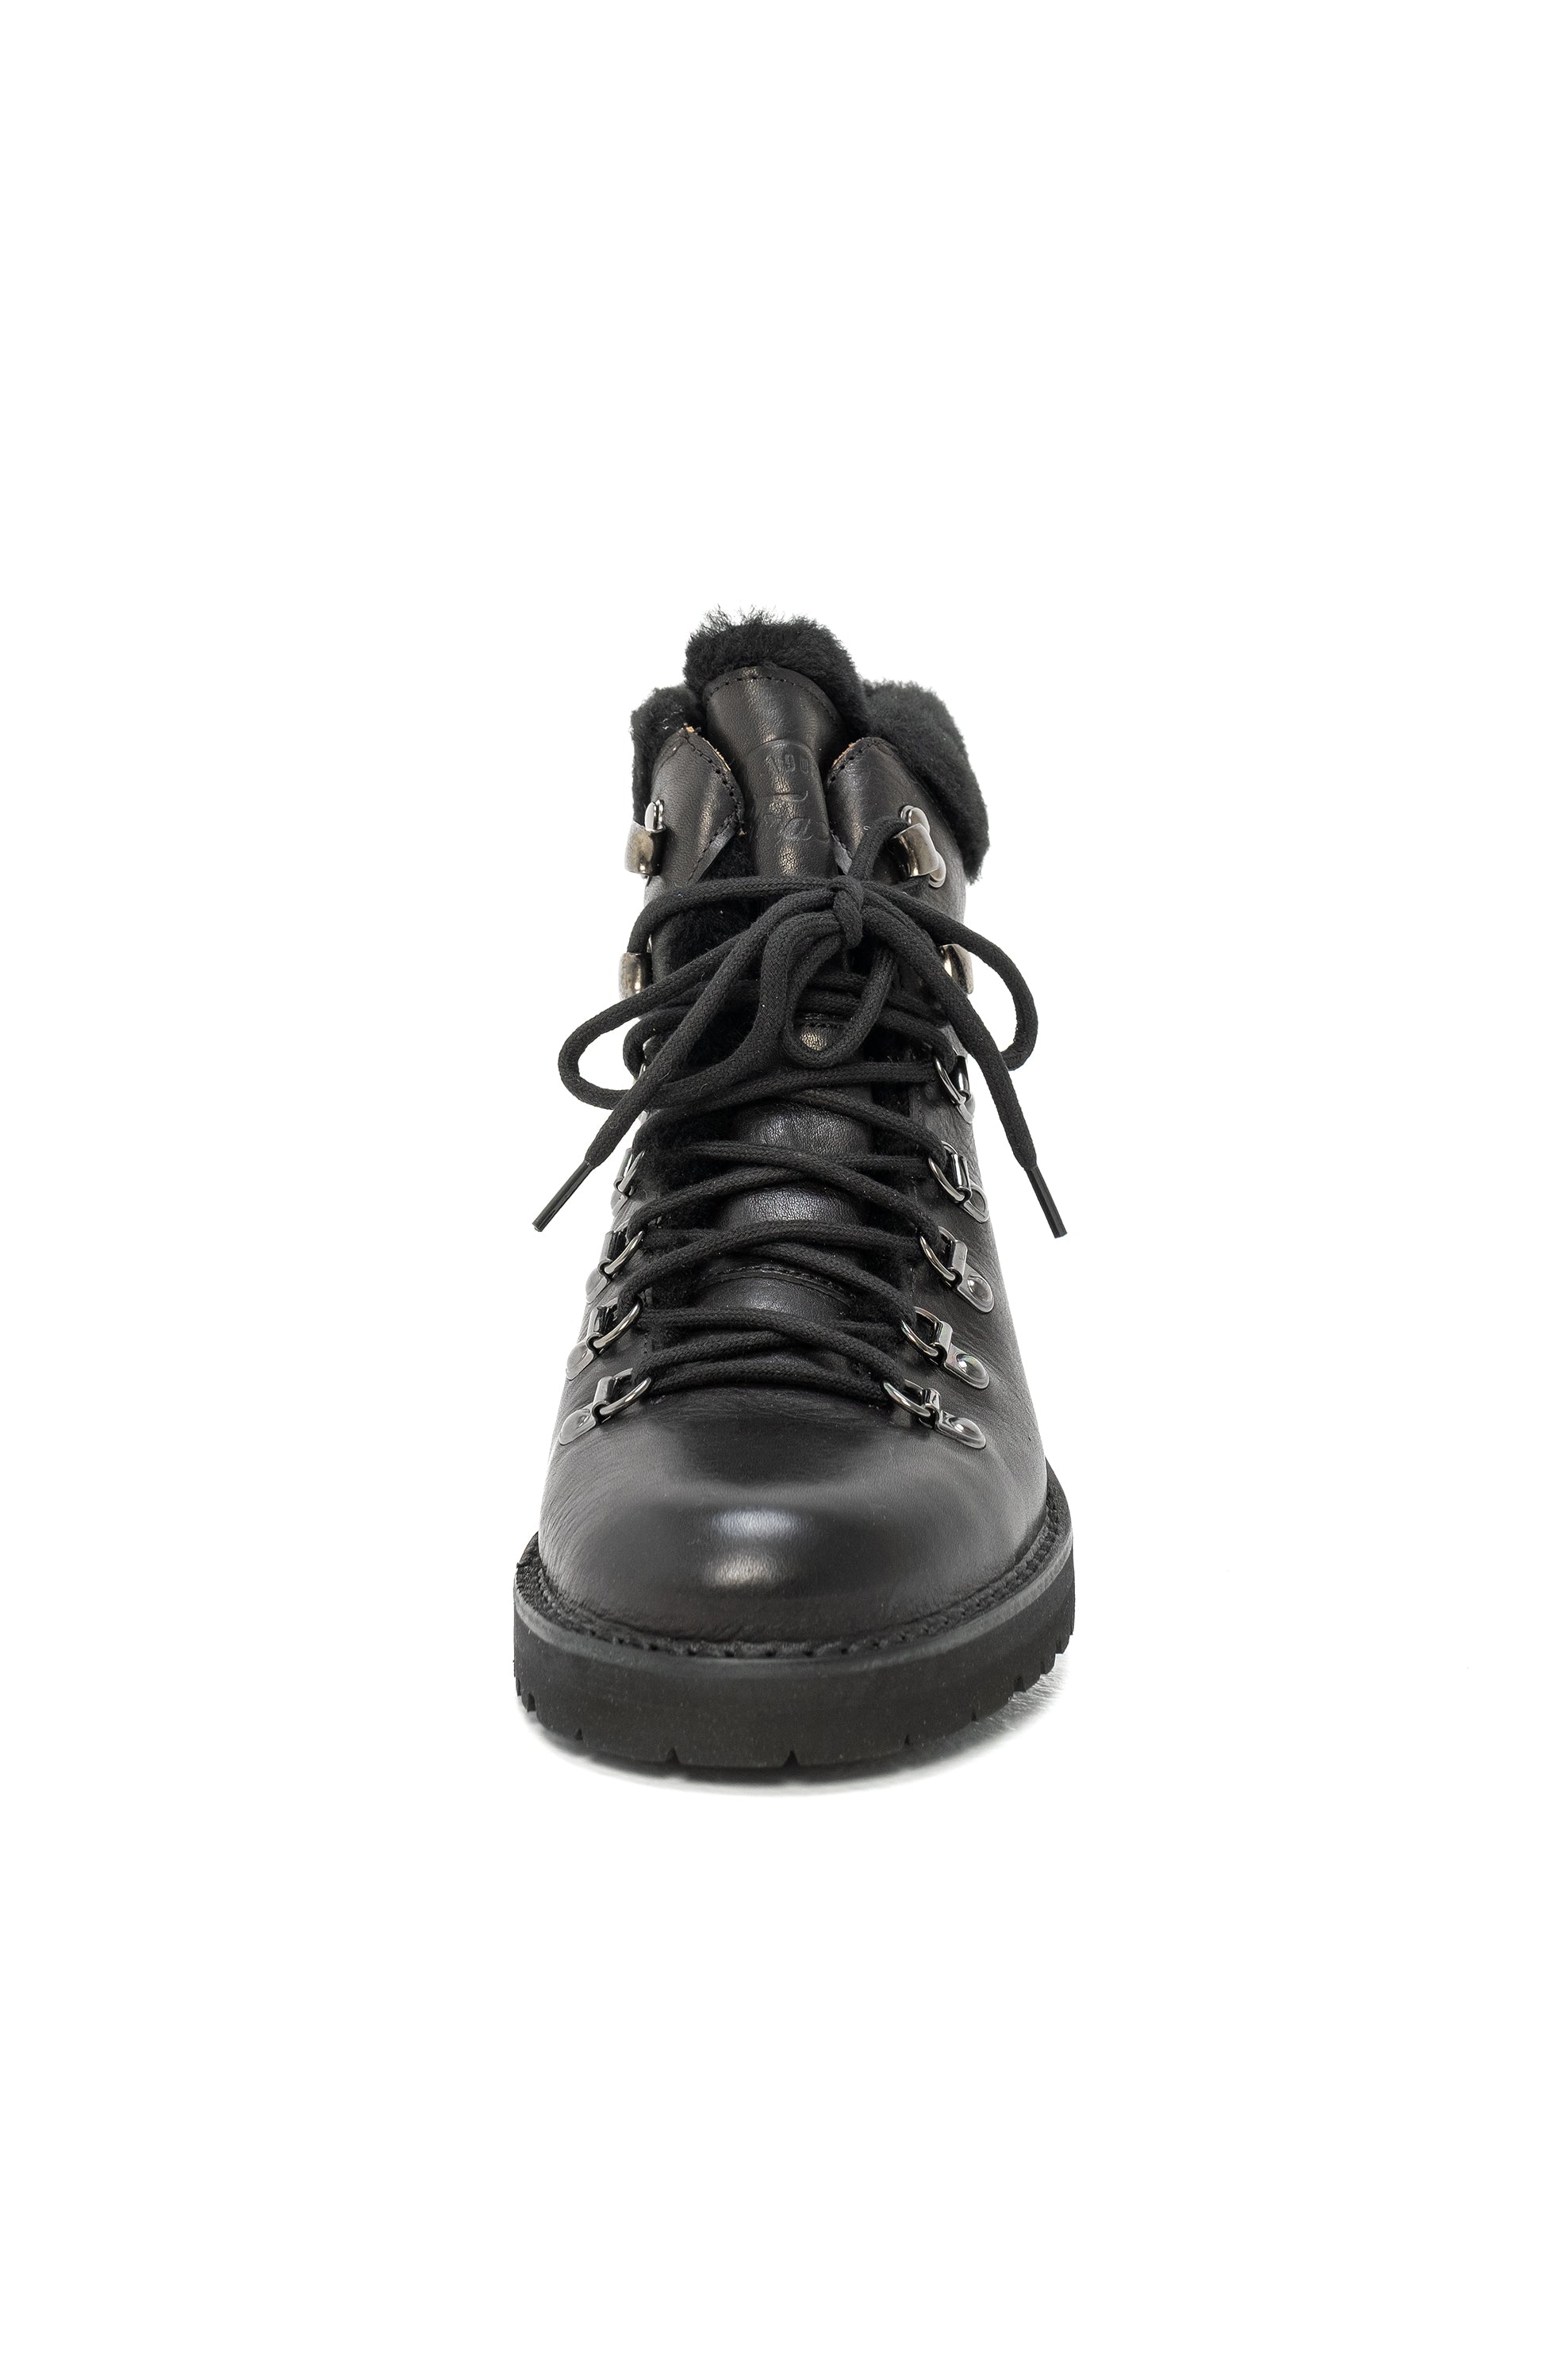 Fur-trim leather boots